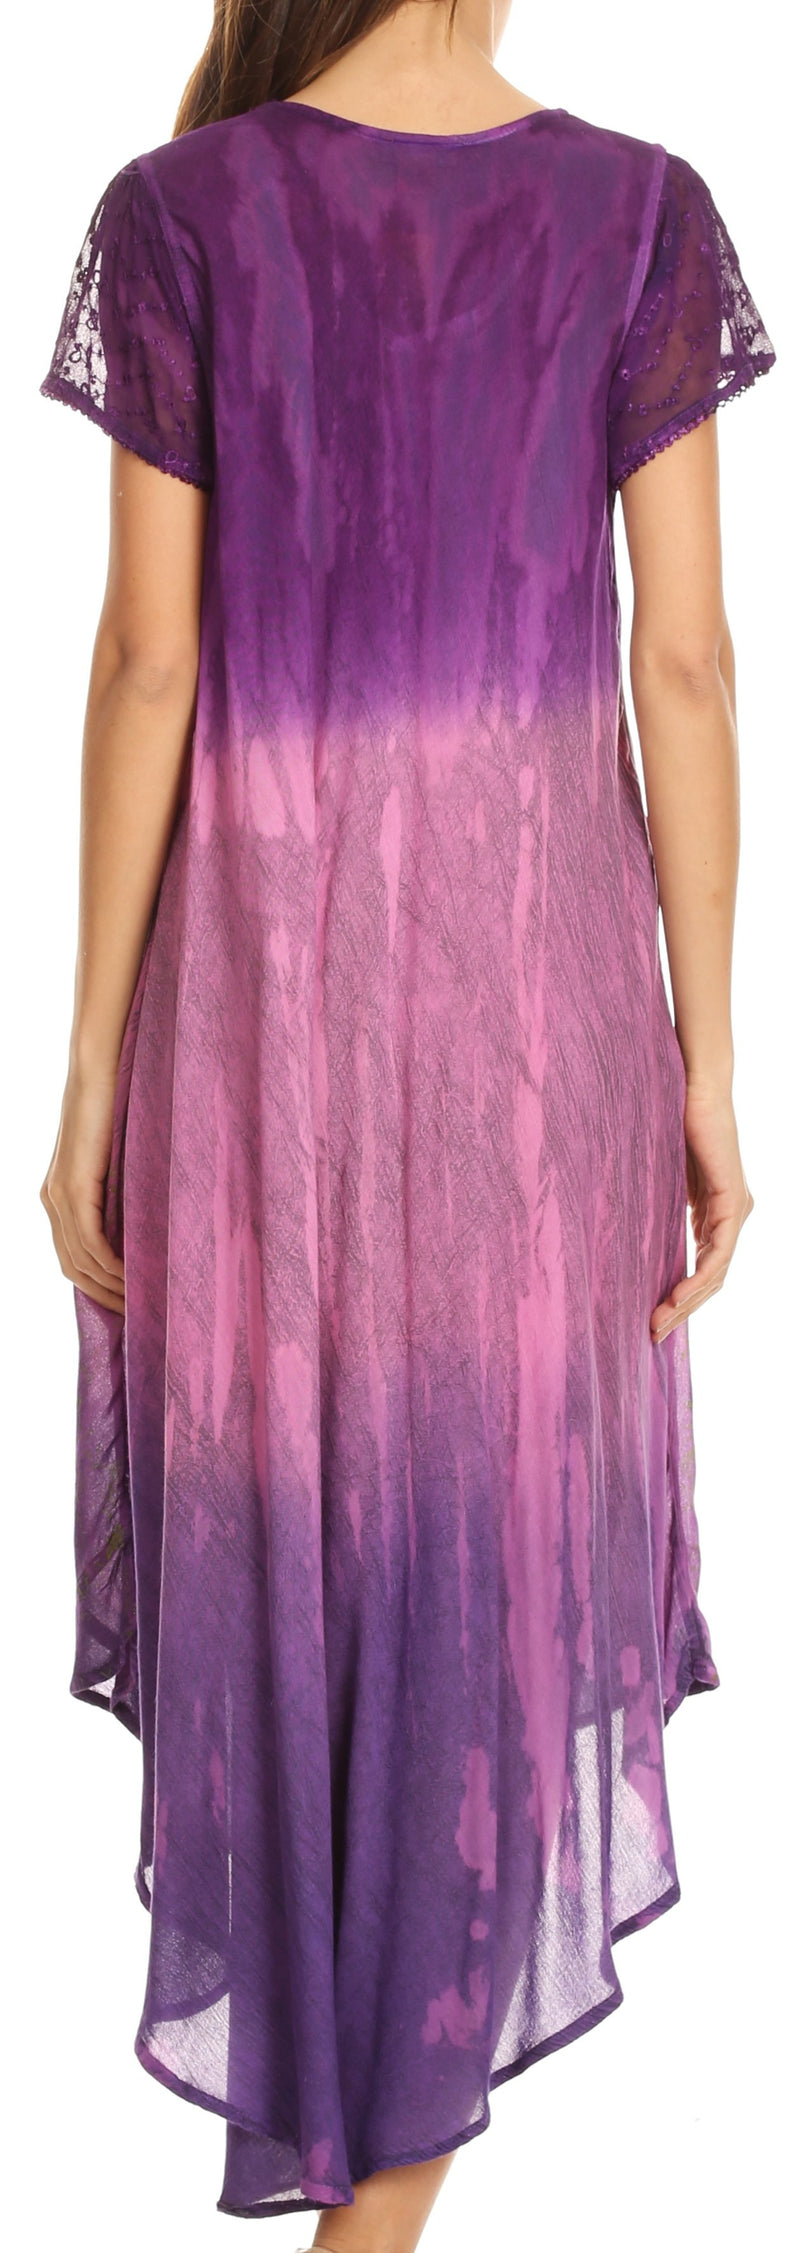 Sakkas Samira Color Block Printed Sheer Cap Sleeve Relaxed Fit Dress | Cover Up